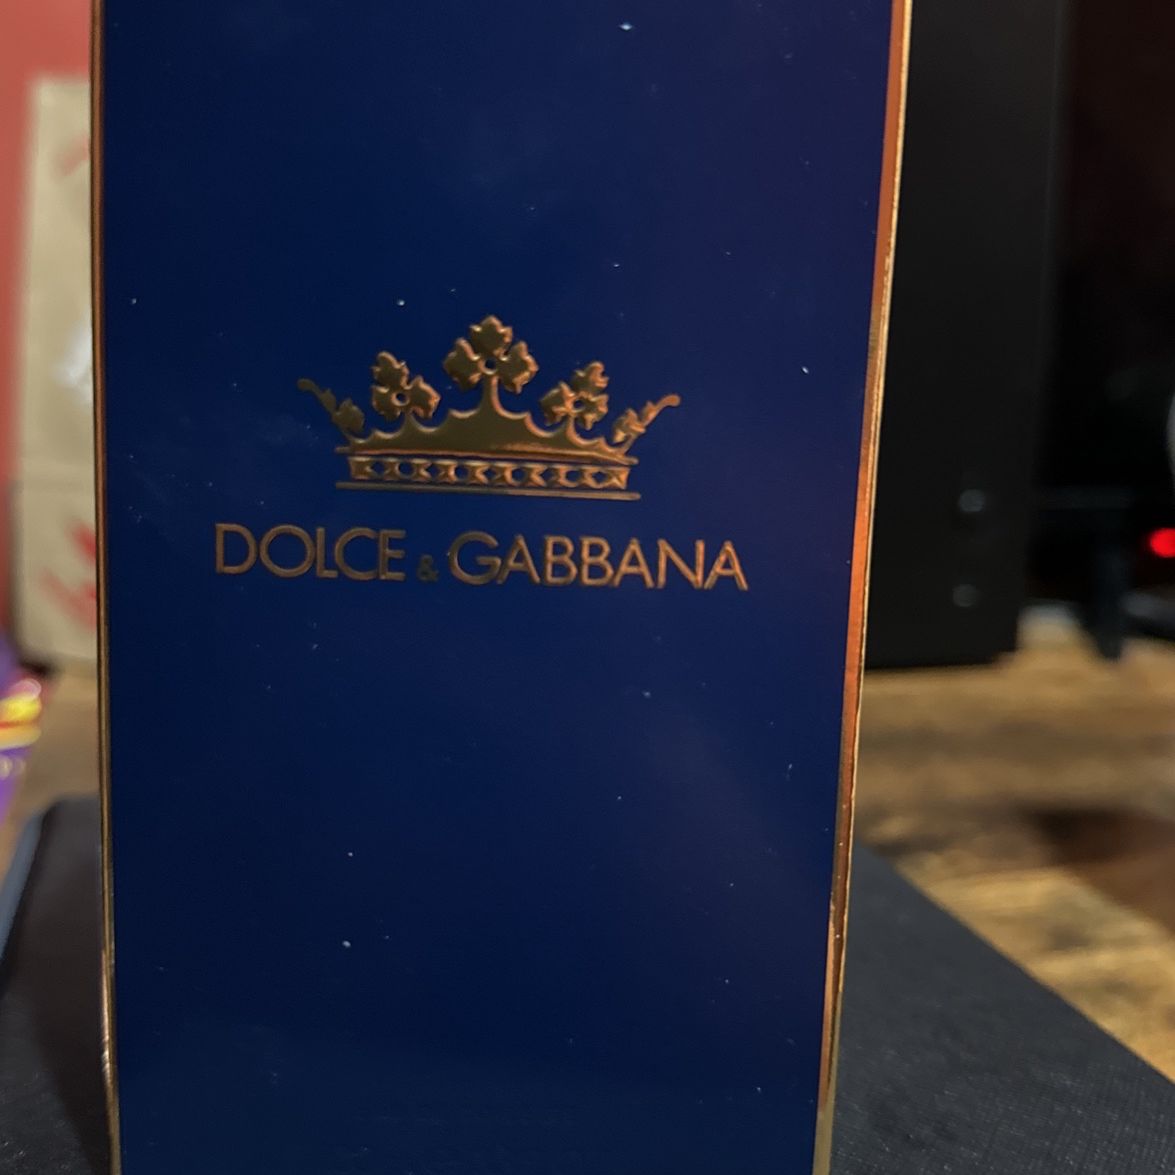 Dolce Gabbana Cologne For Men